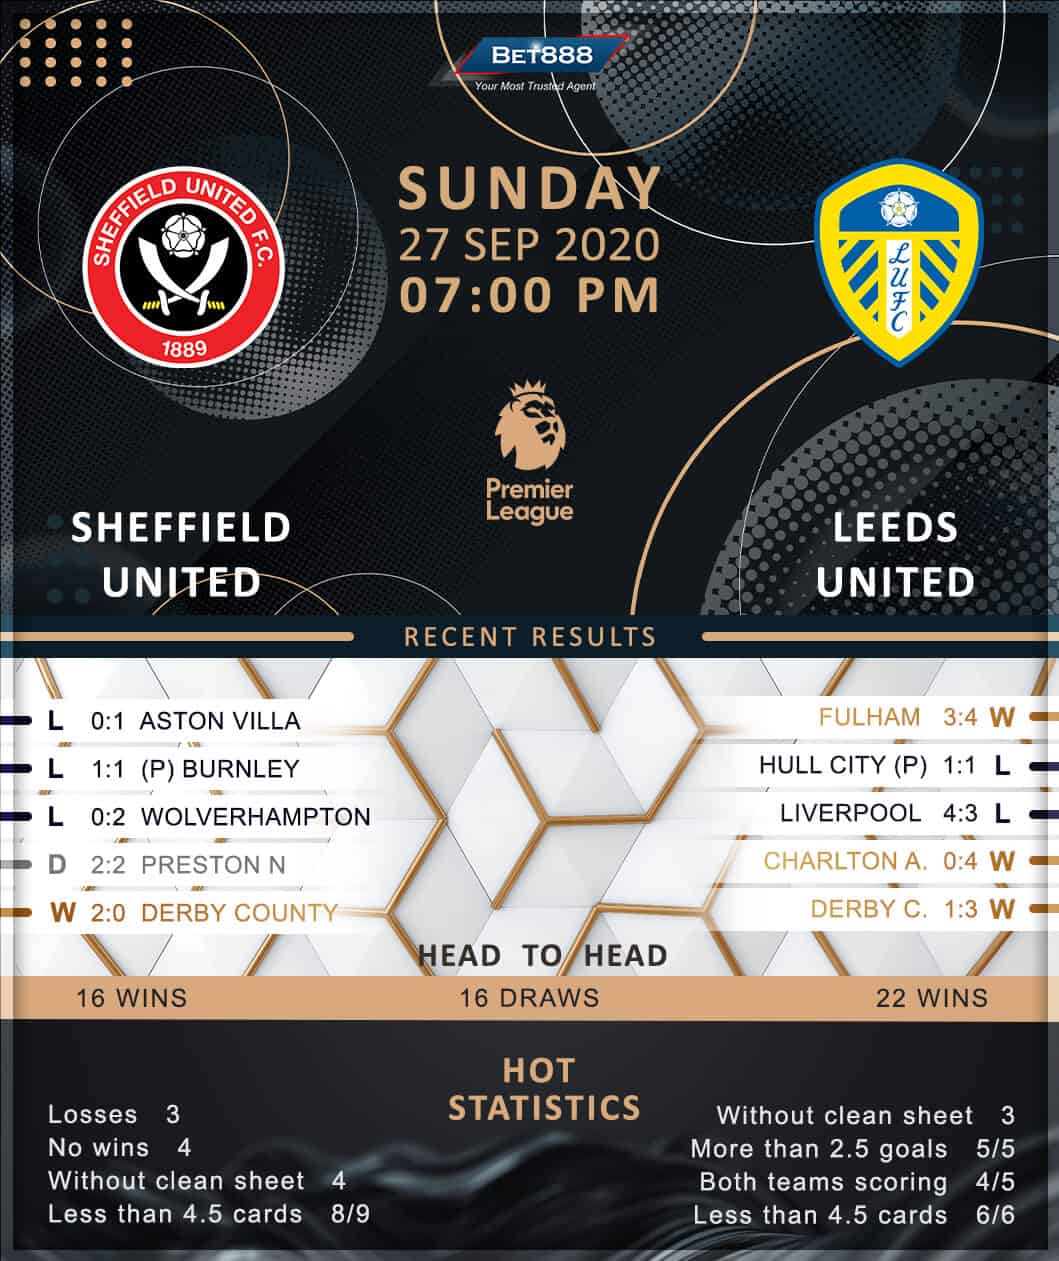 Sheffield United vs Leeds United 27/09/20